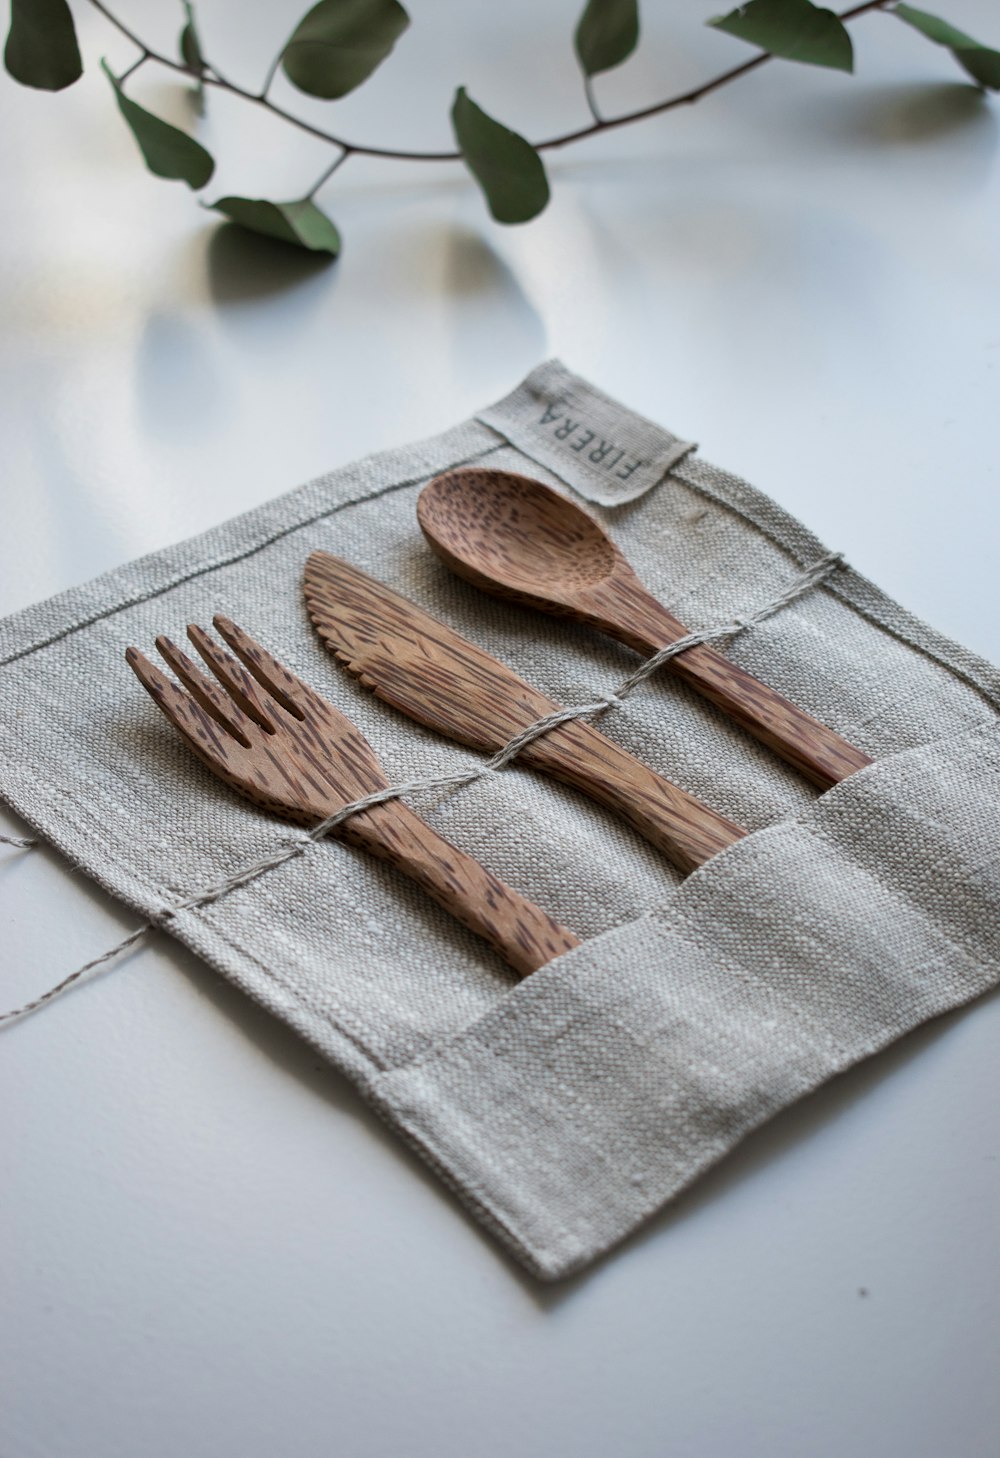 tenedor, cuchara y cuchillo de madera marrón sobre textil